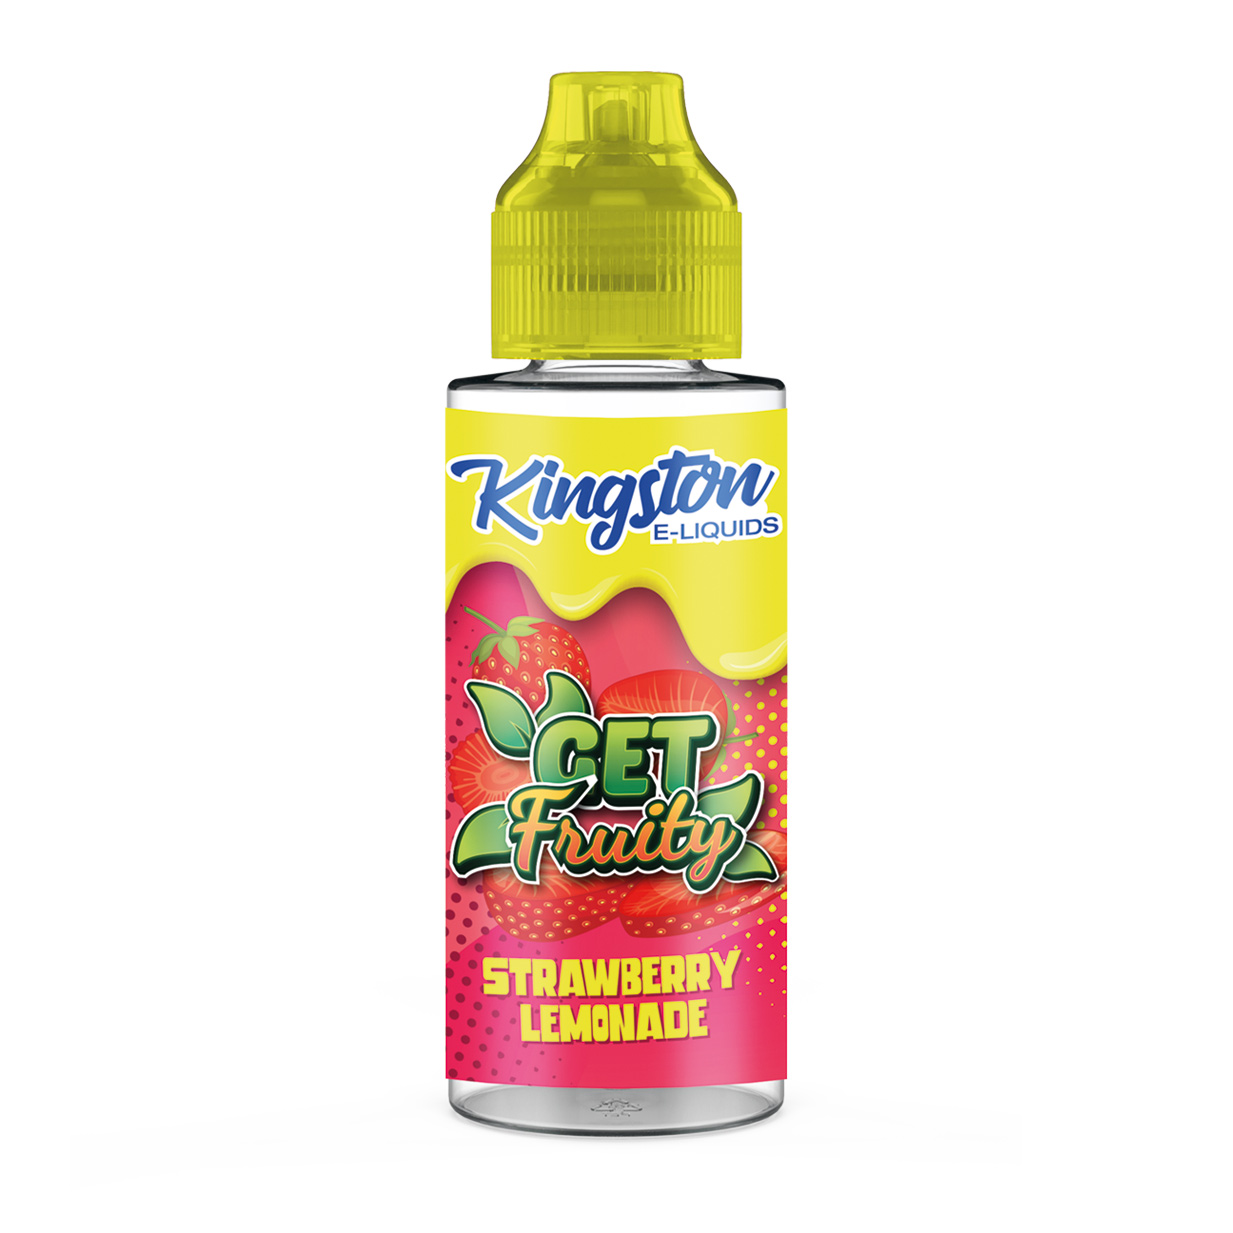 Strawberry Lemonade by Kingston Get Fruity 100ml.jpg